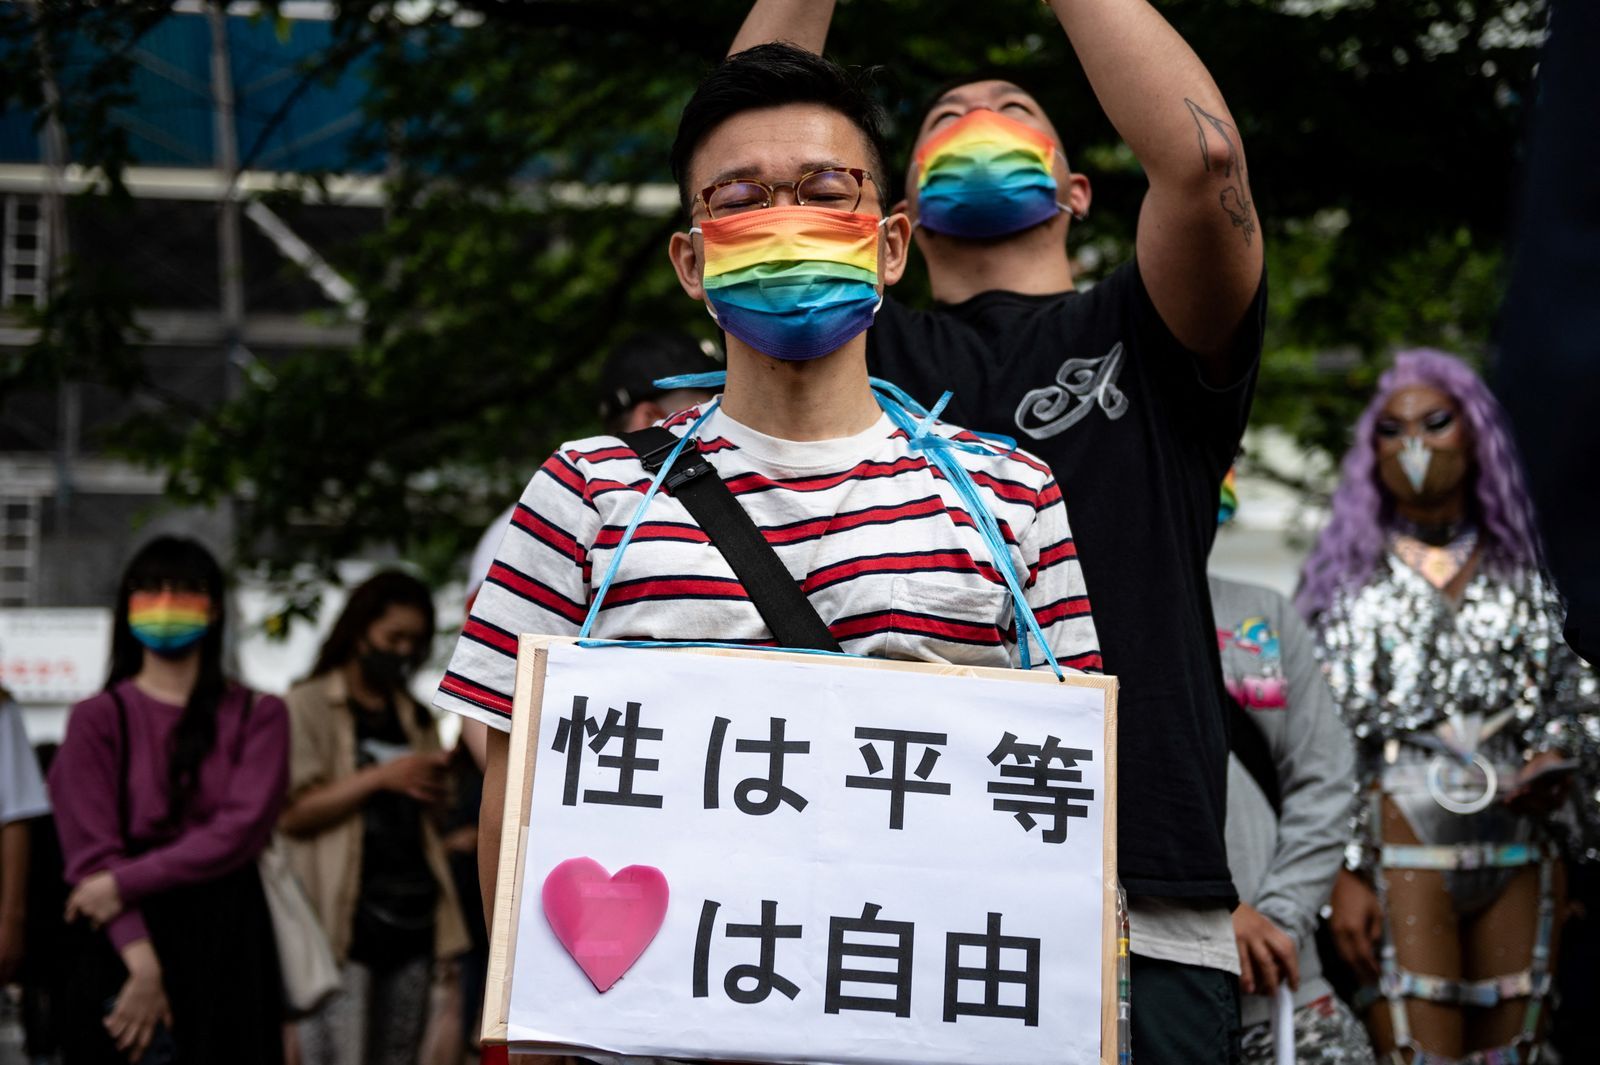 AFP - ญี่ปุ่น ประท้วง LGBT ความหลากหลายทางเพศ